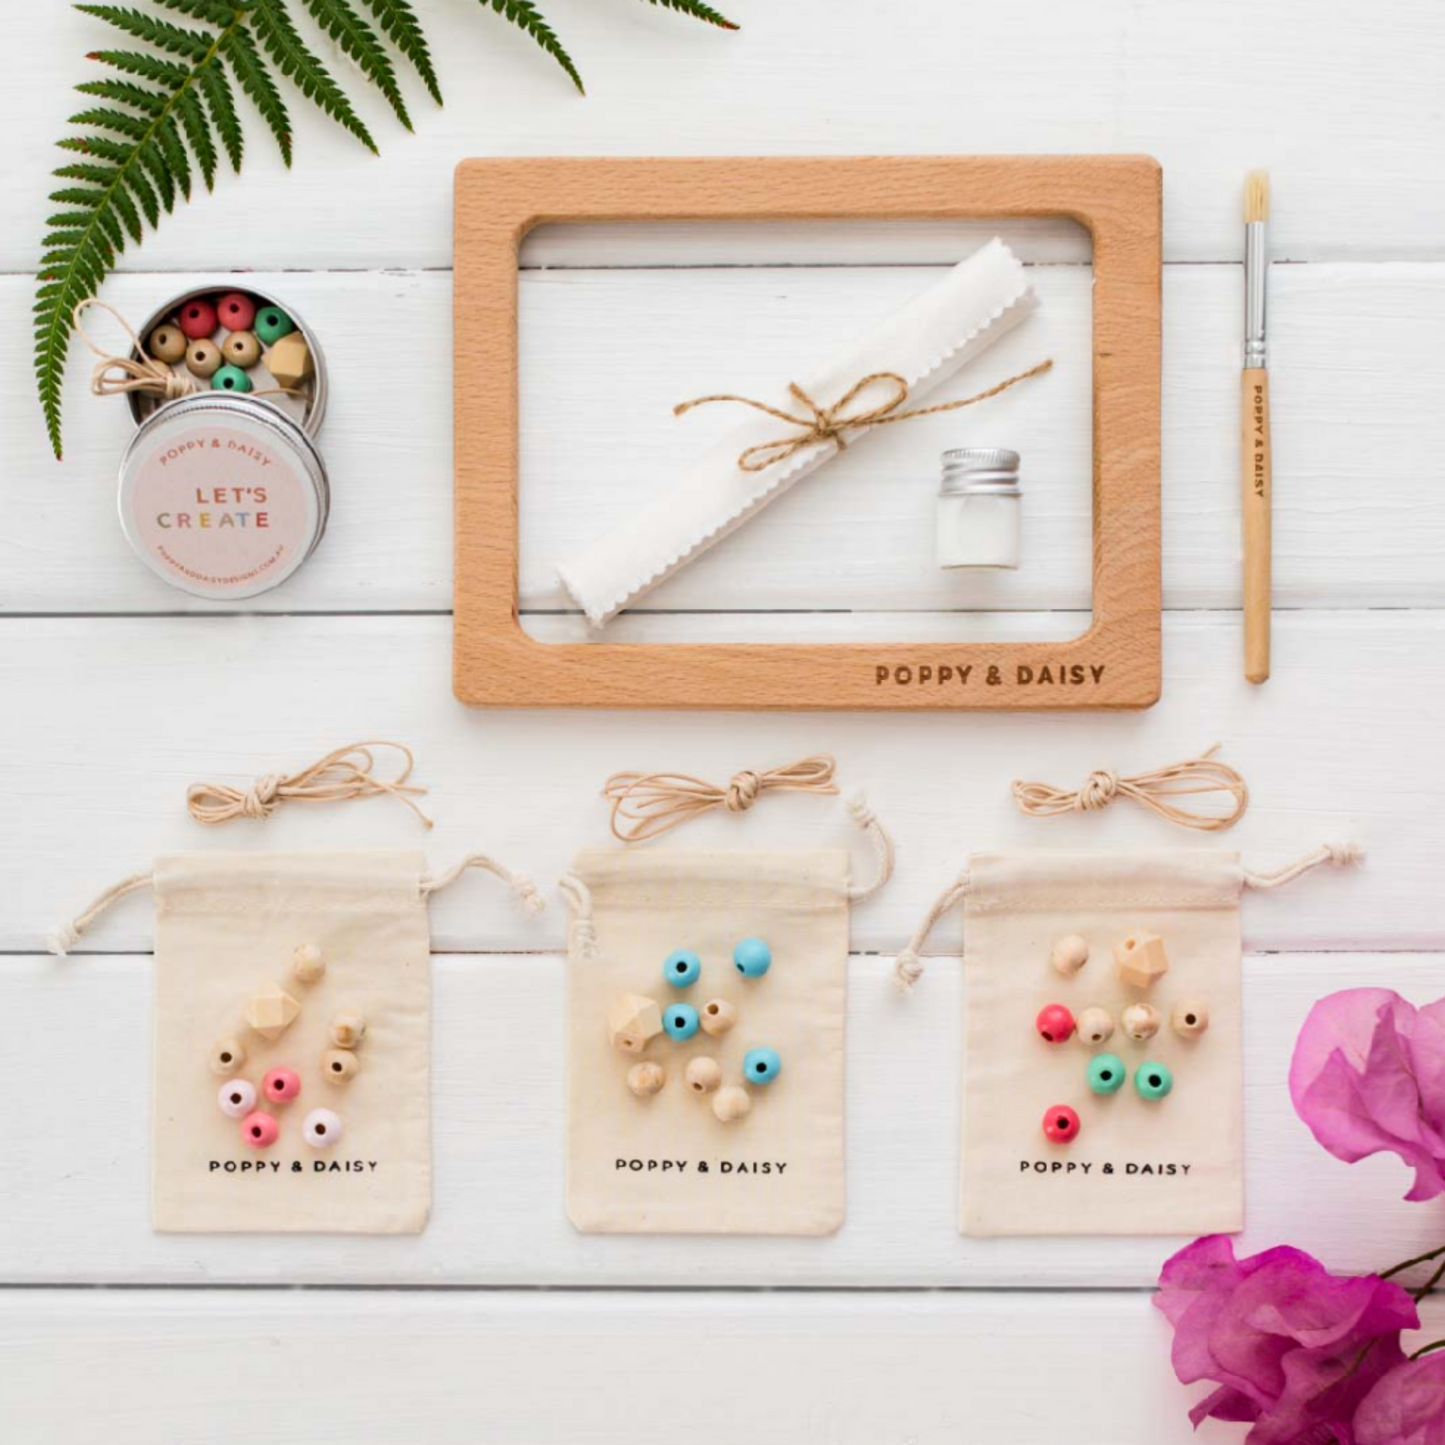 POPPY & DAISY - Let's Create Friendship Necklace Kit